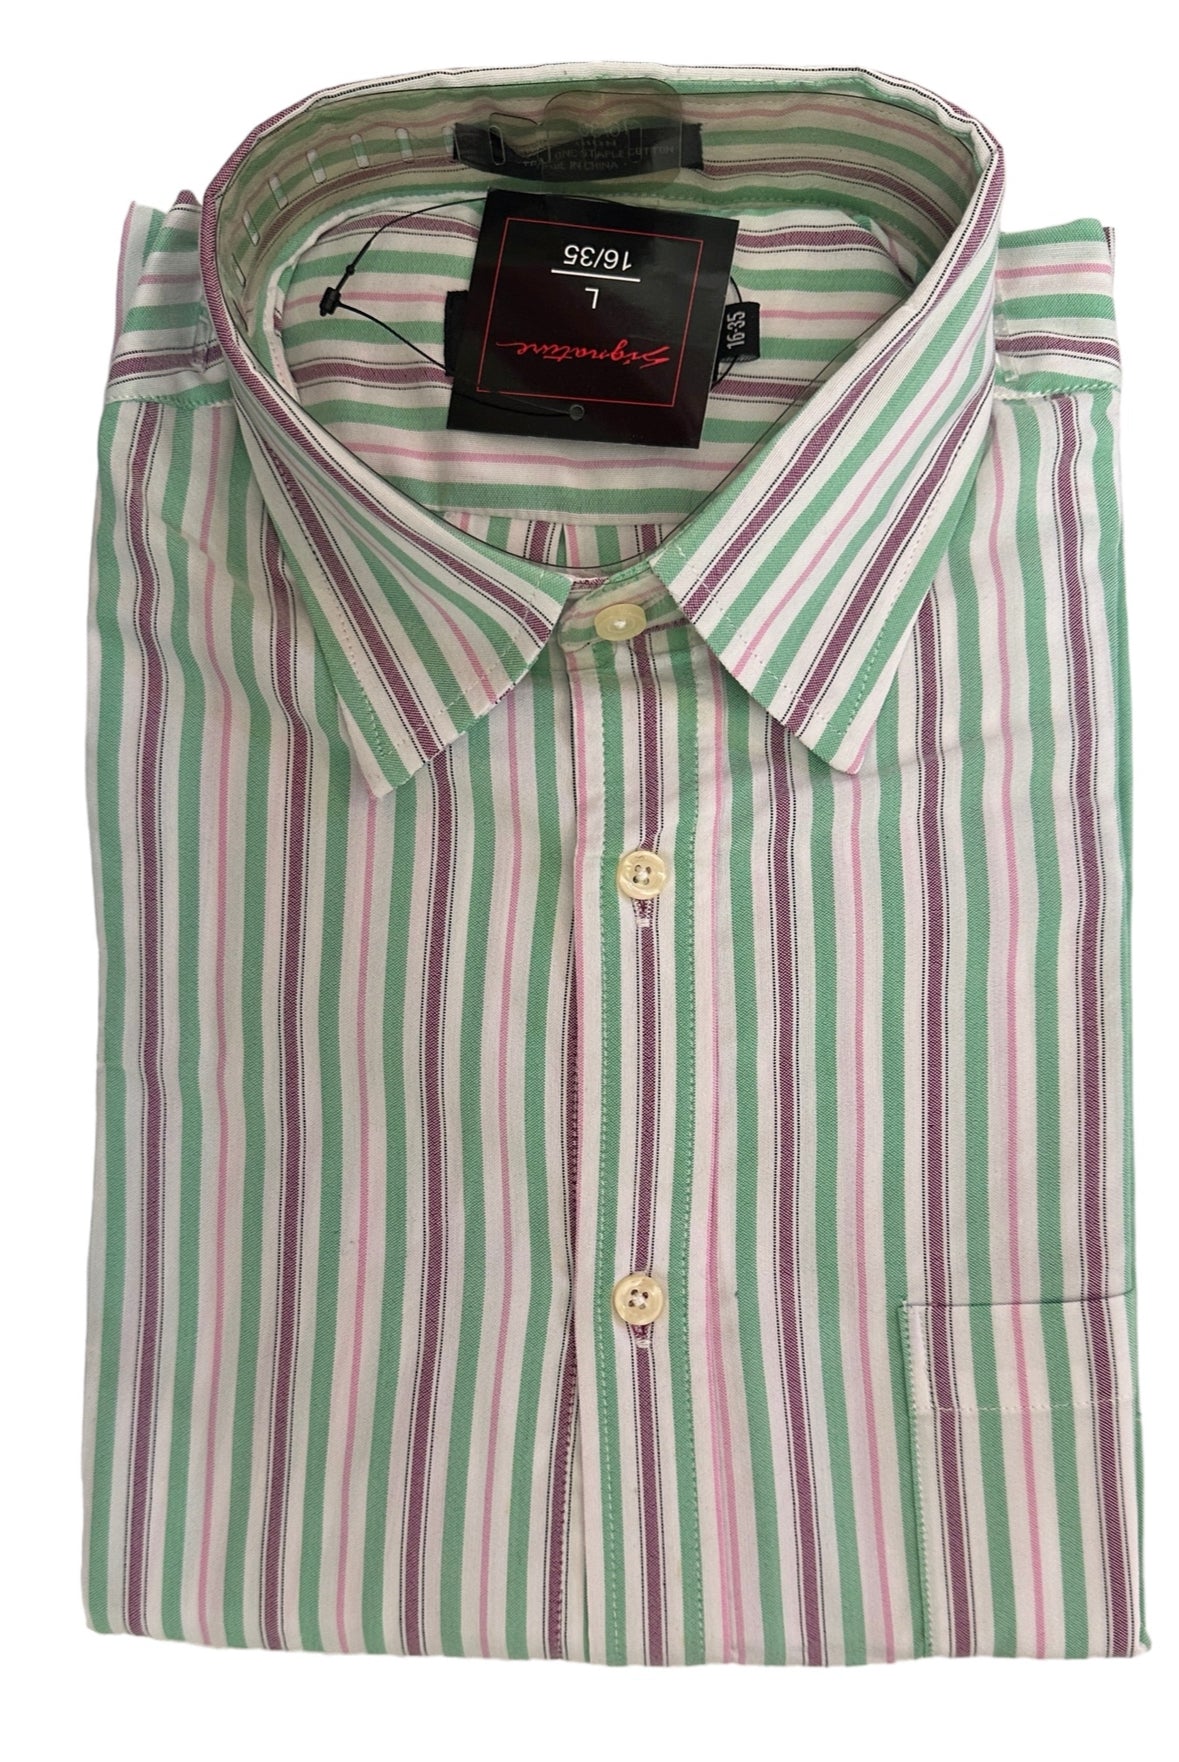 Men Shirt "Kirkland Signature" Stripe 100% Cotton NWT by Brands Overstock | Brands Overstock